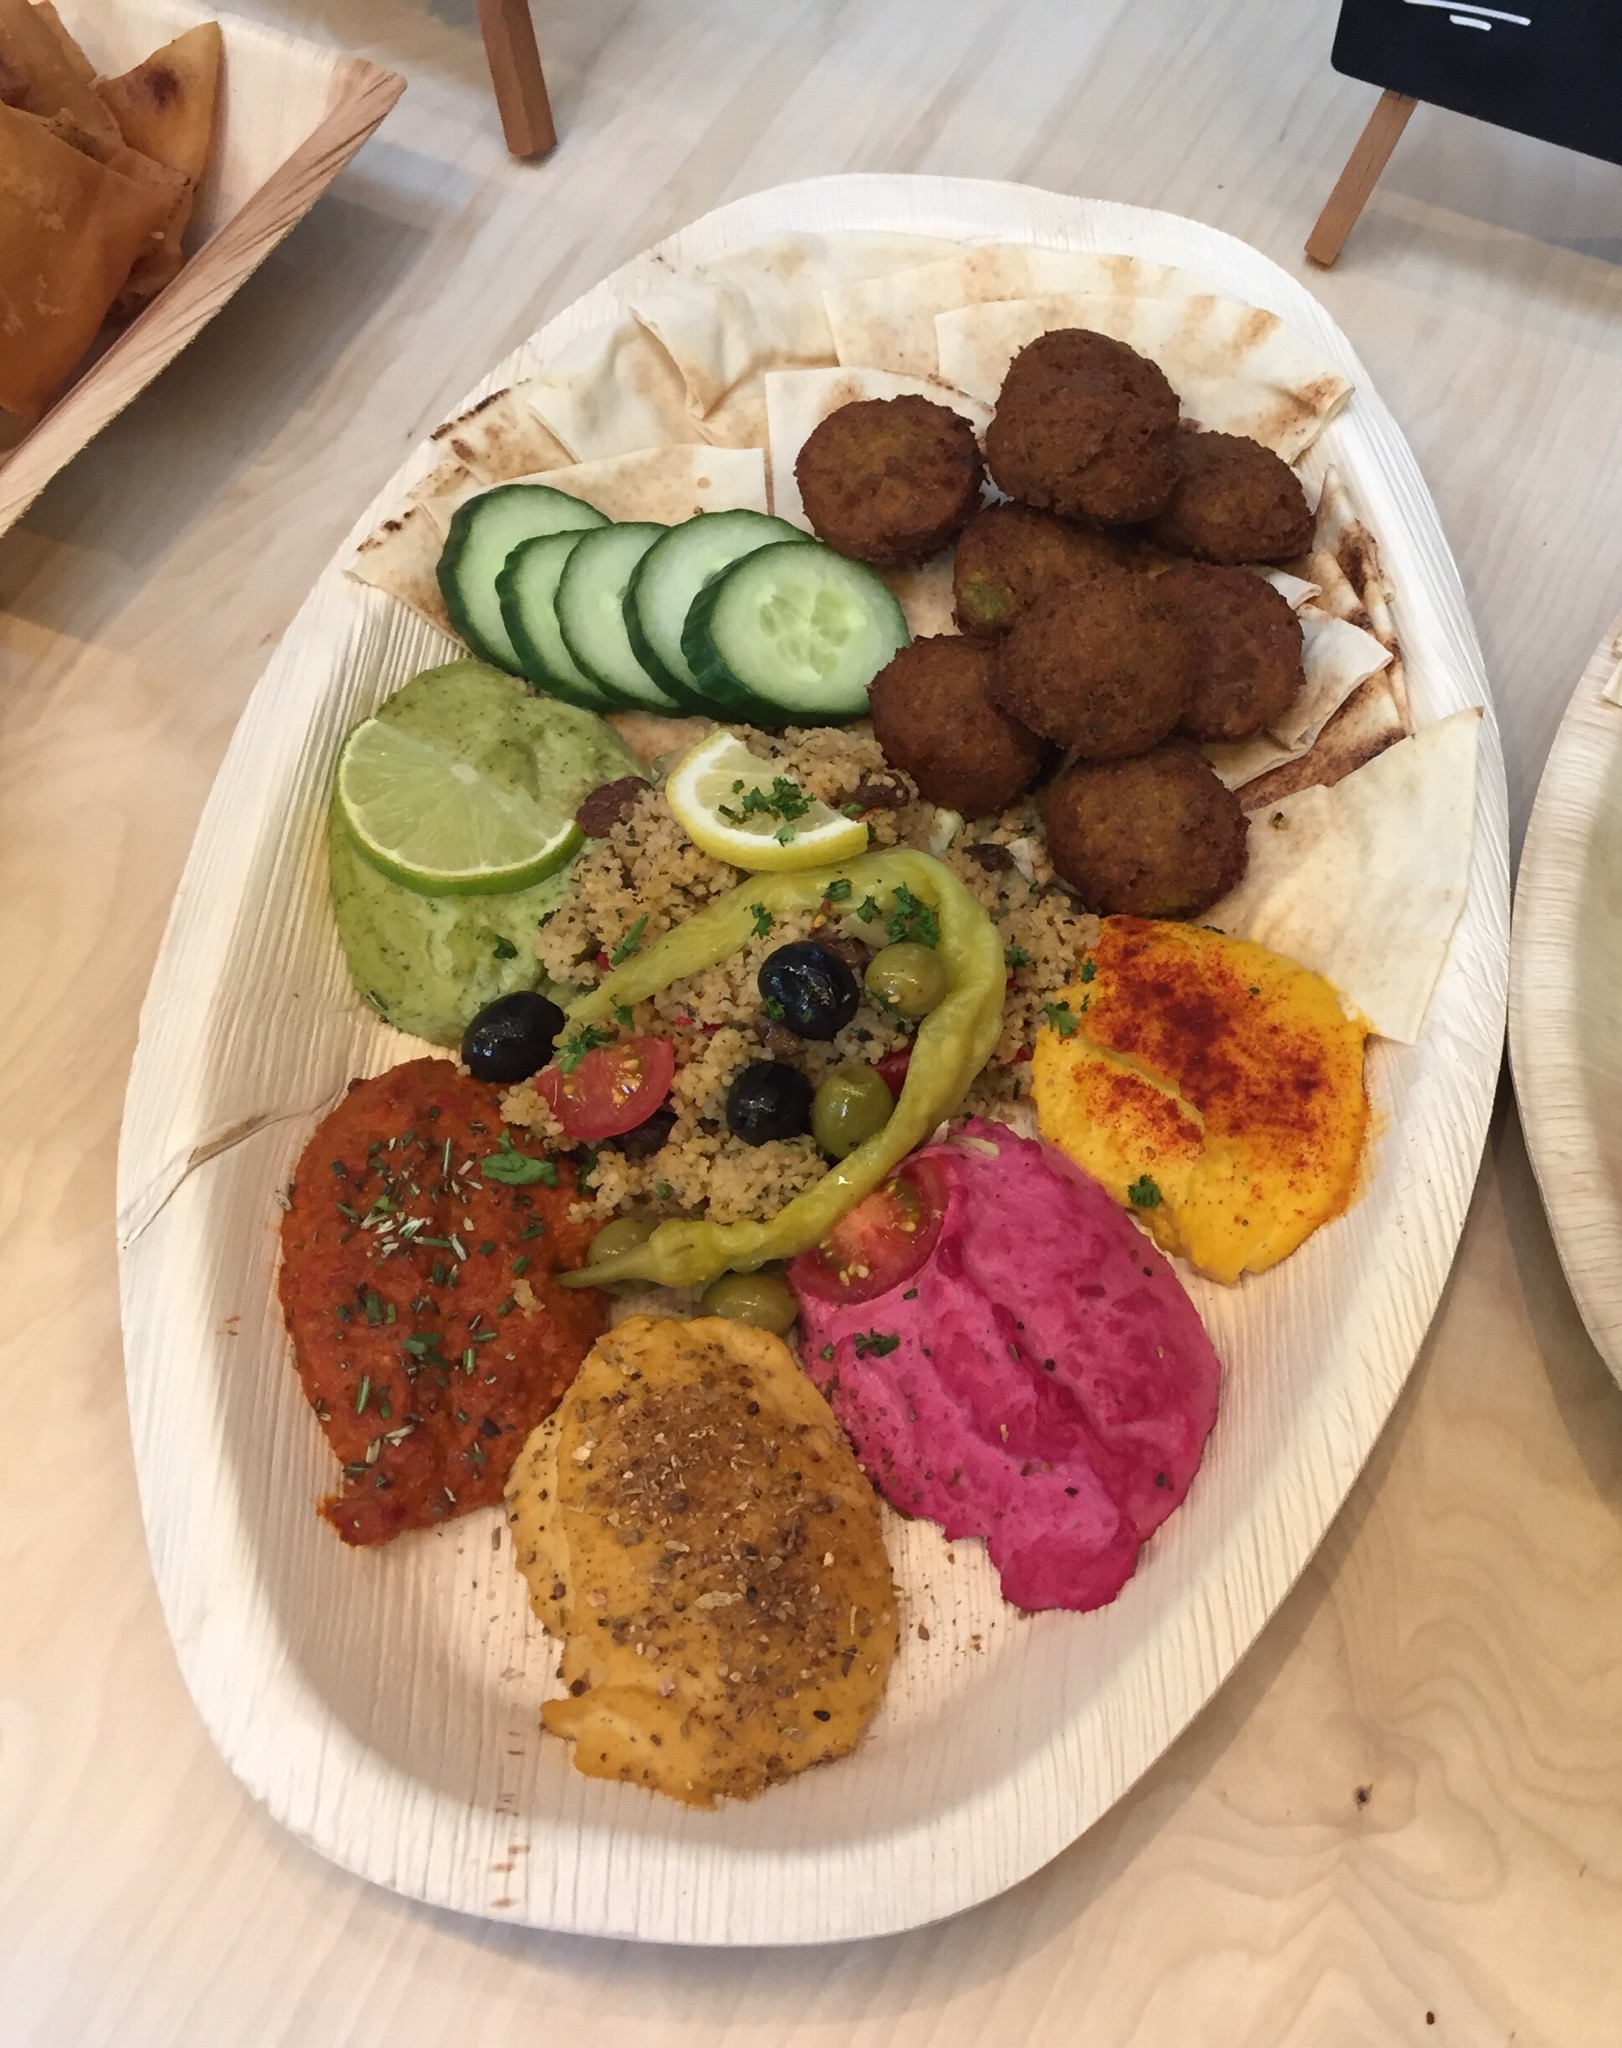 Greek Mezze plate from Maza at FoodHallen